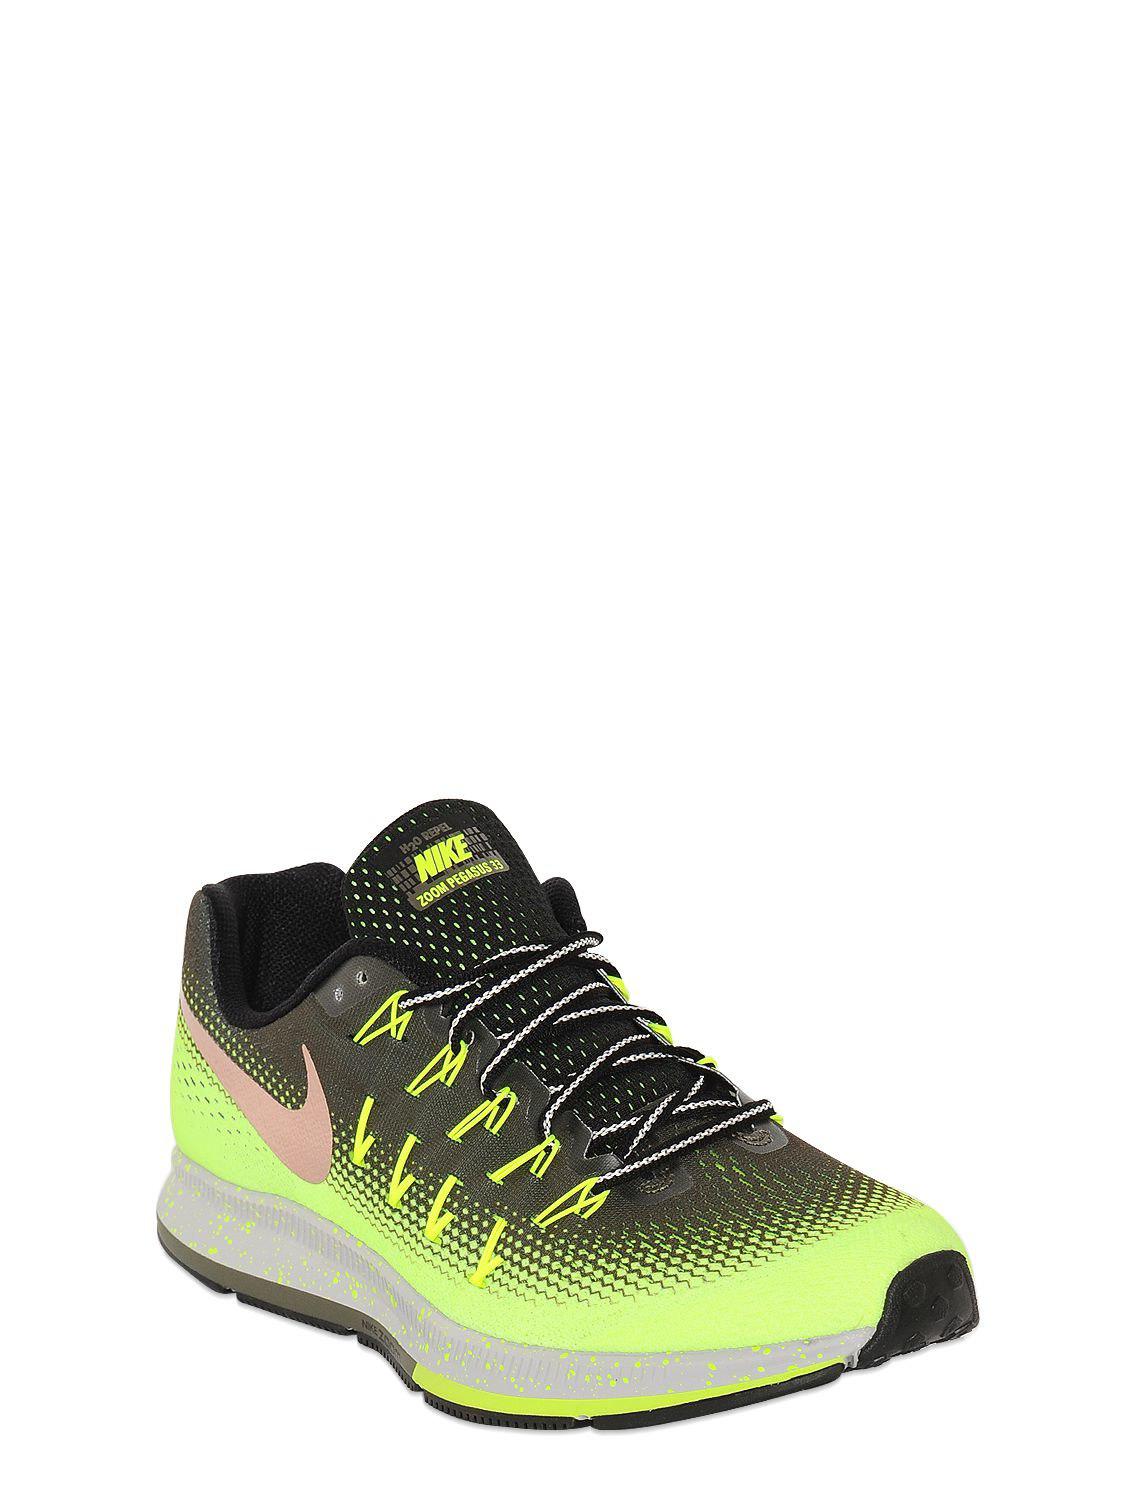 Nike Air Zoom Pegasus 33 Shield Running Shoes in Green/Grey (Green) for Men  - Lyst